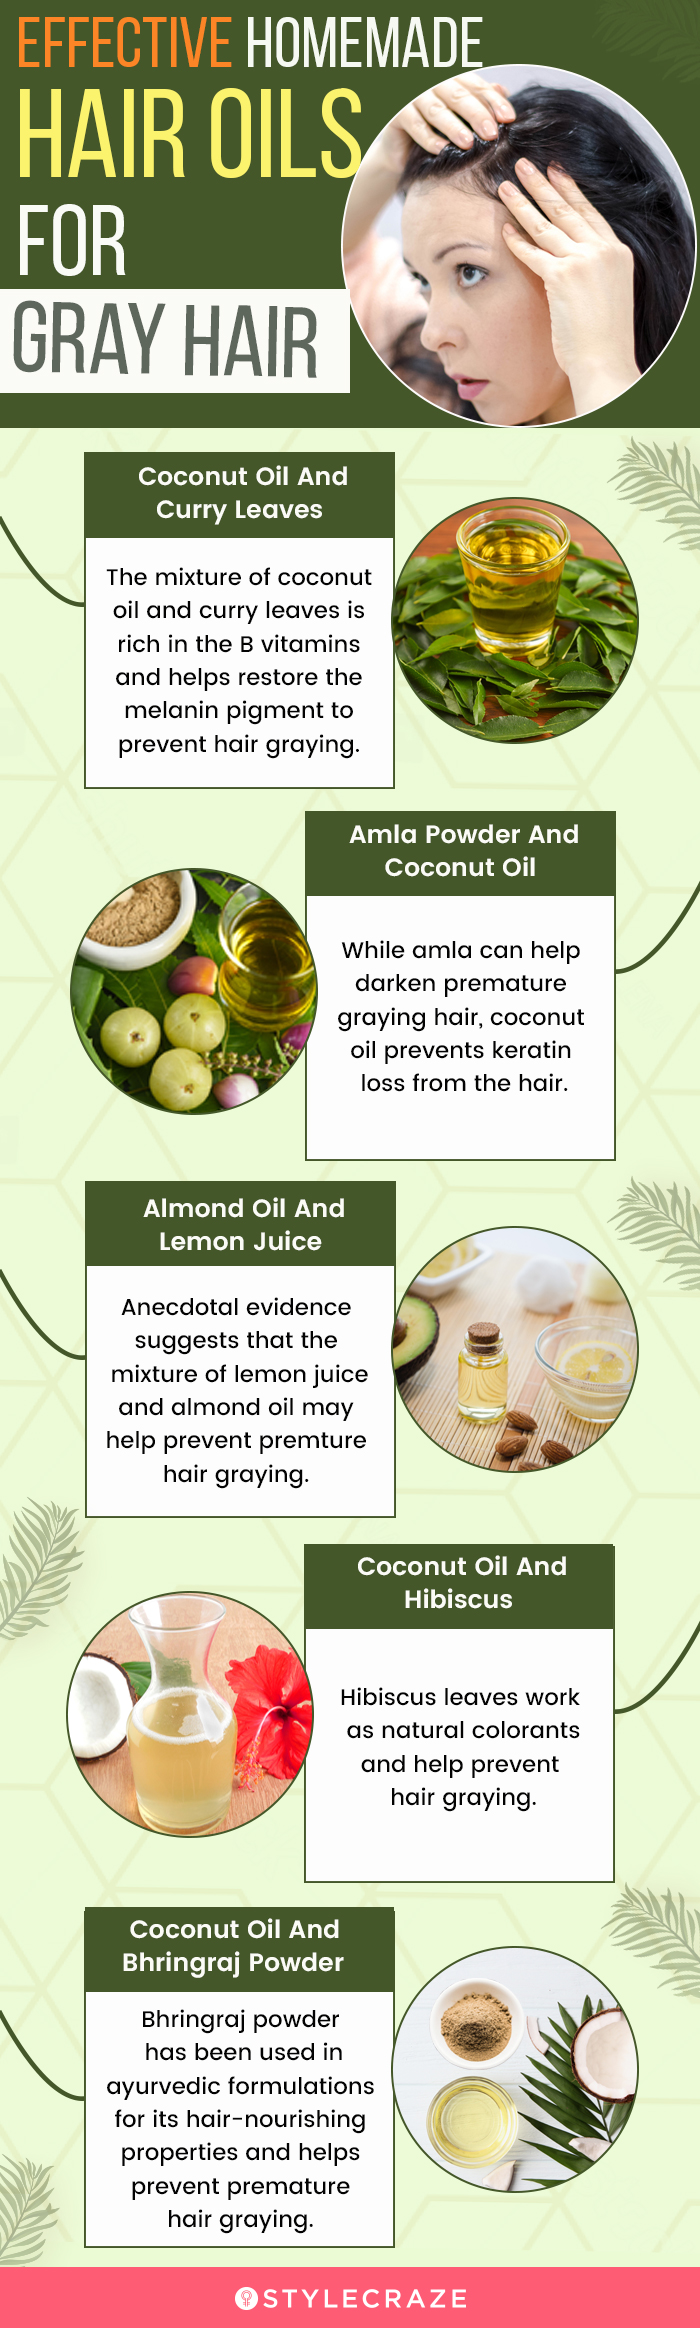 Amla Oil: Does It Really Work as a Hair Treatment?